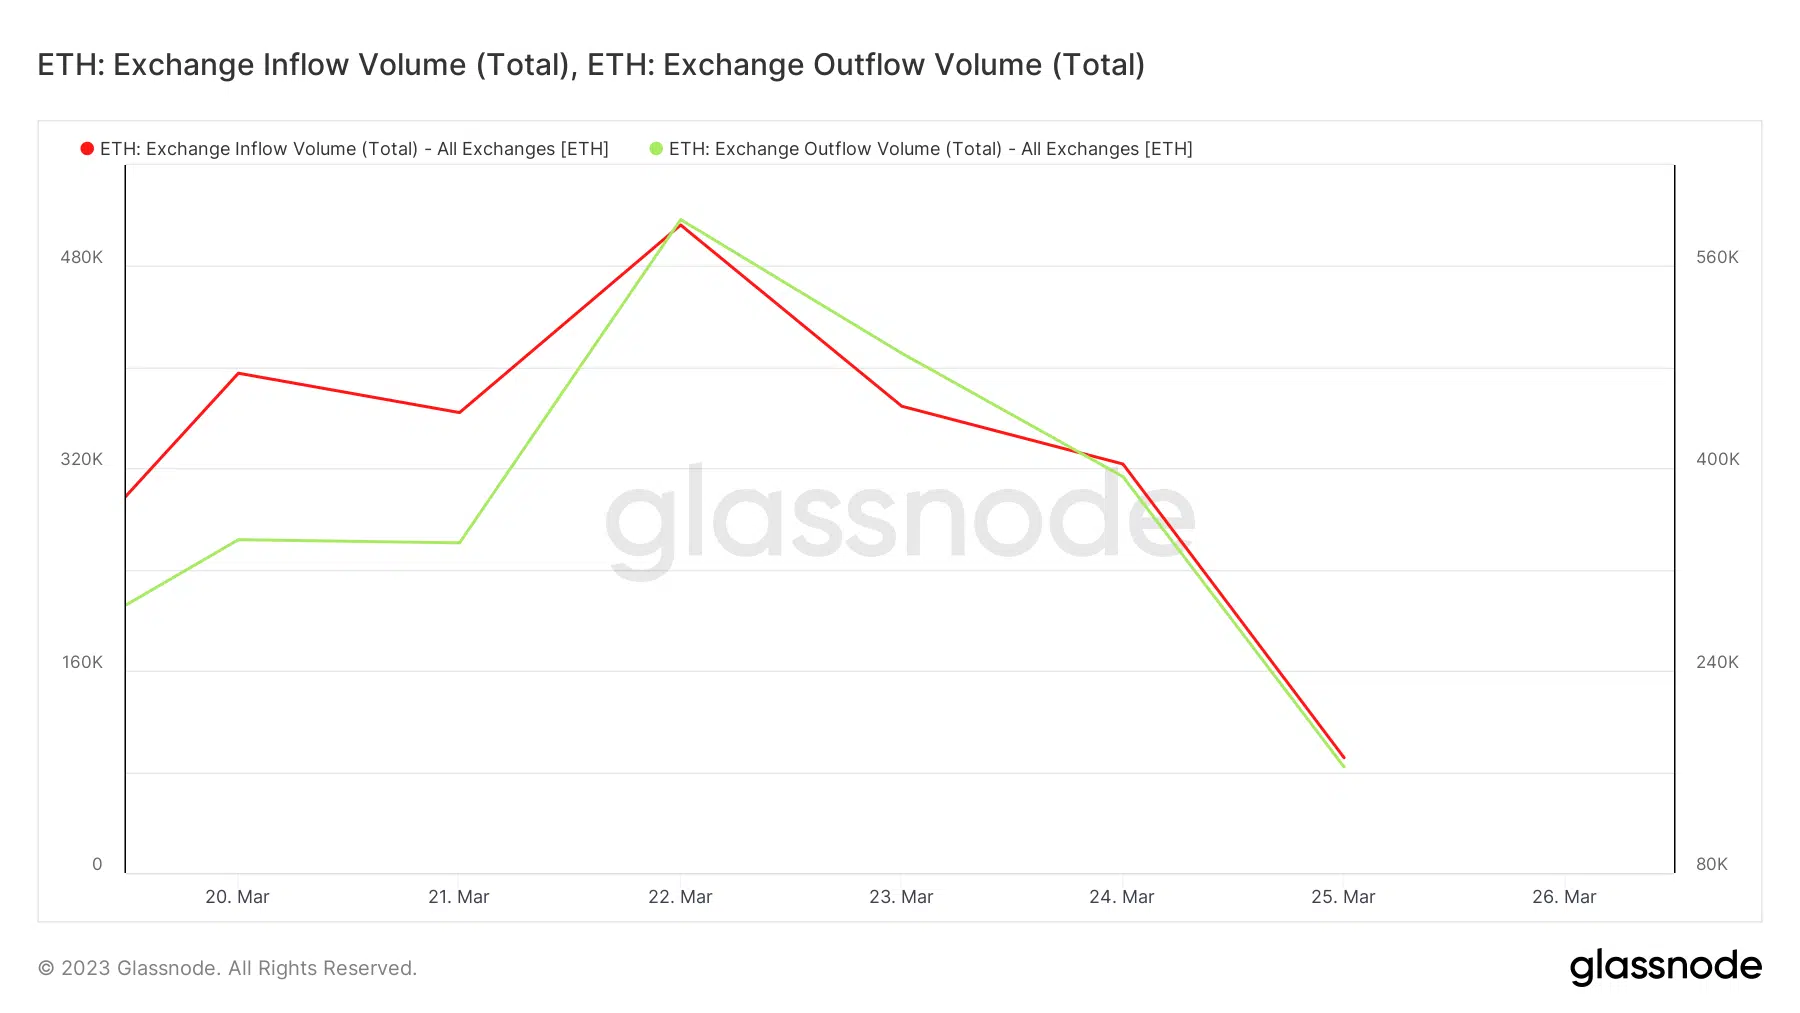 ETH exchange flow volumes